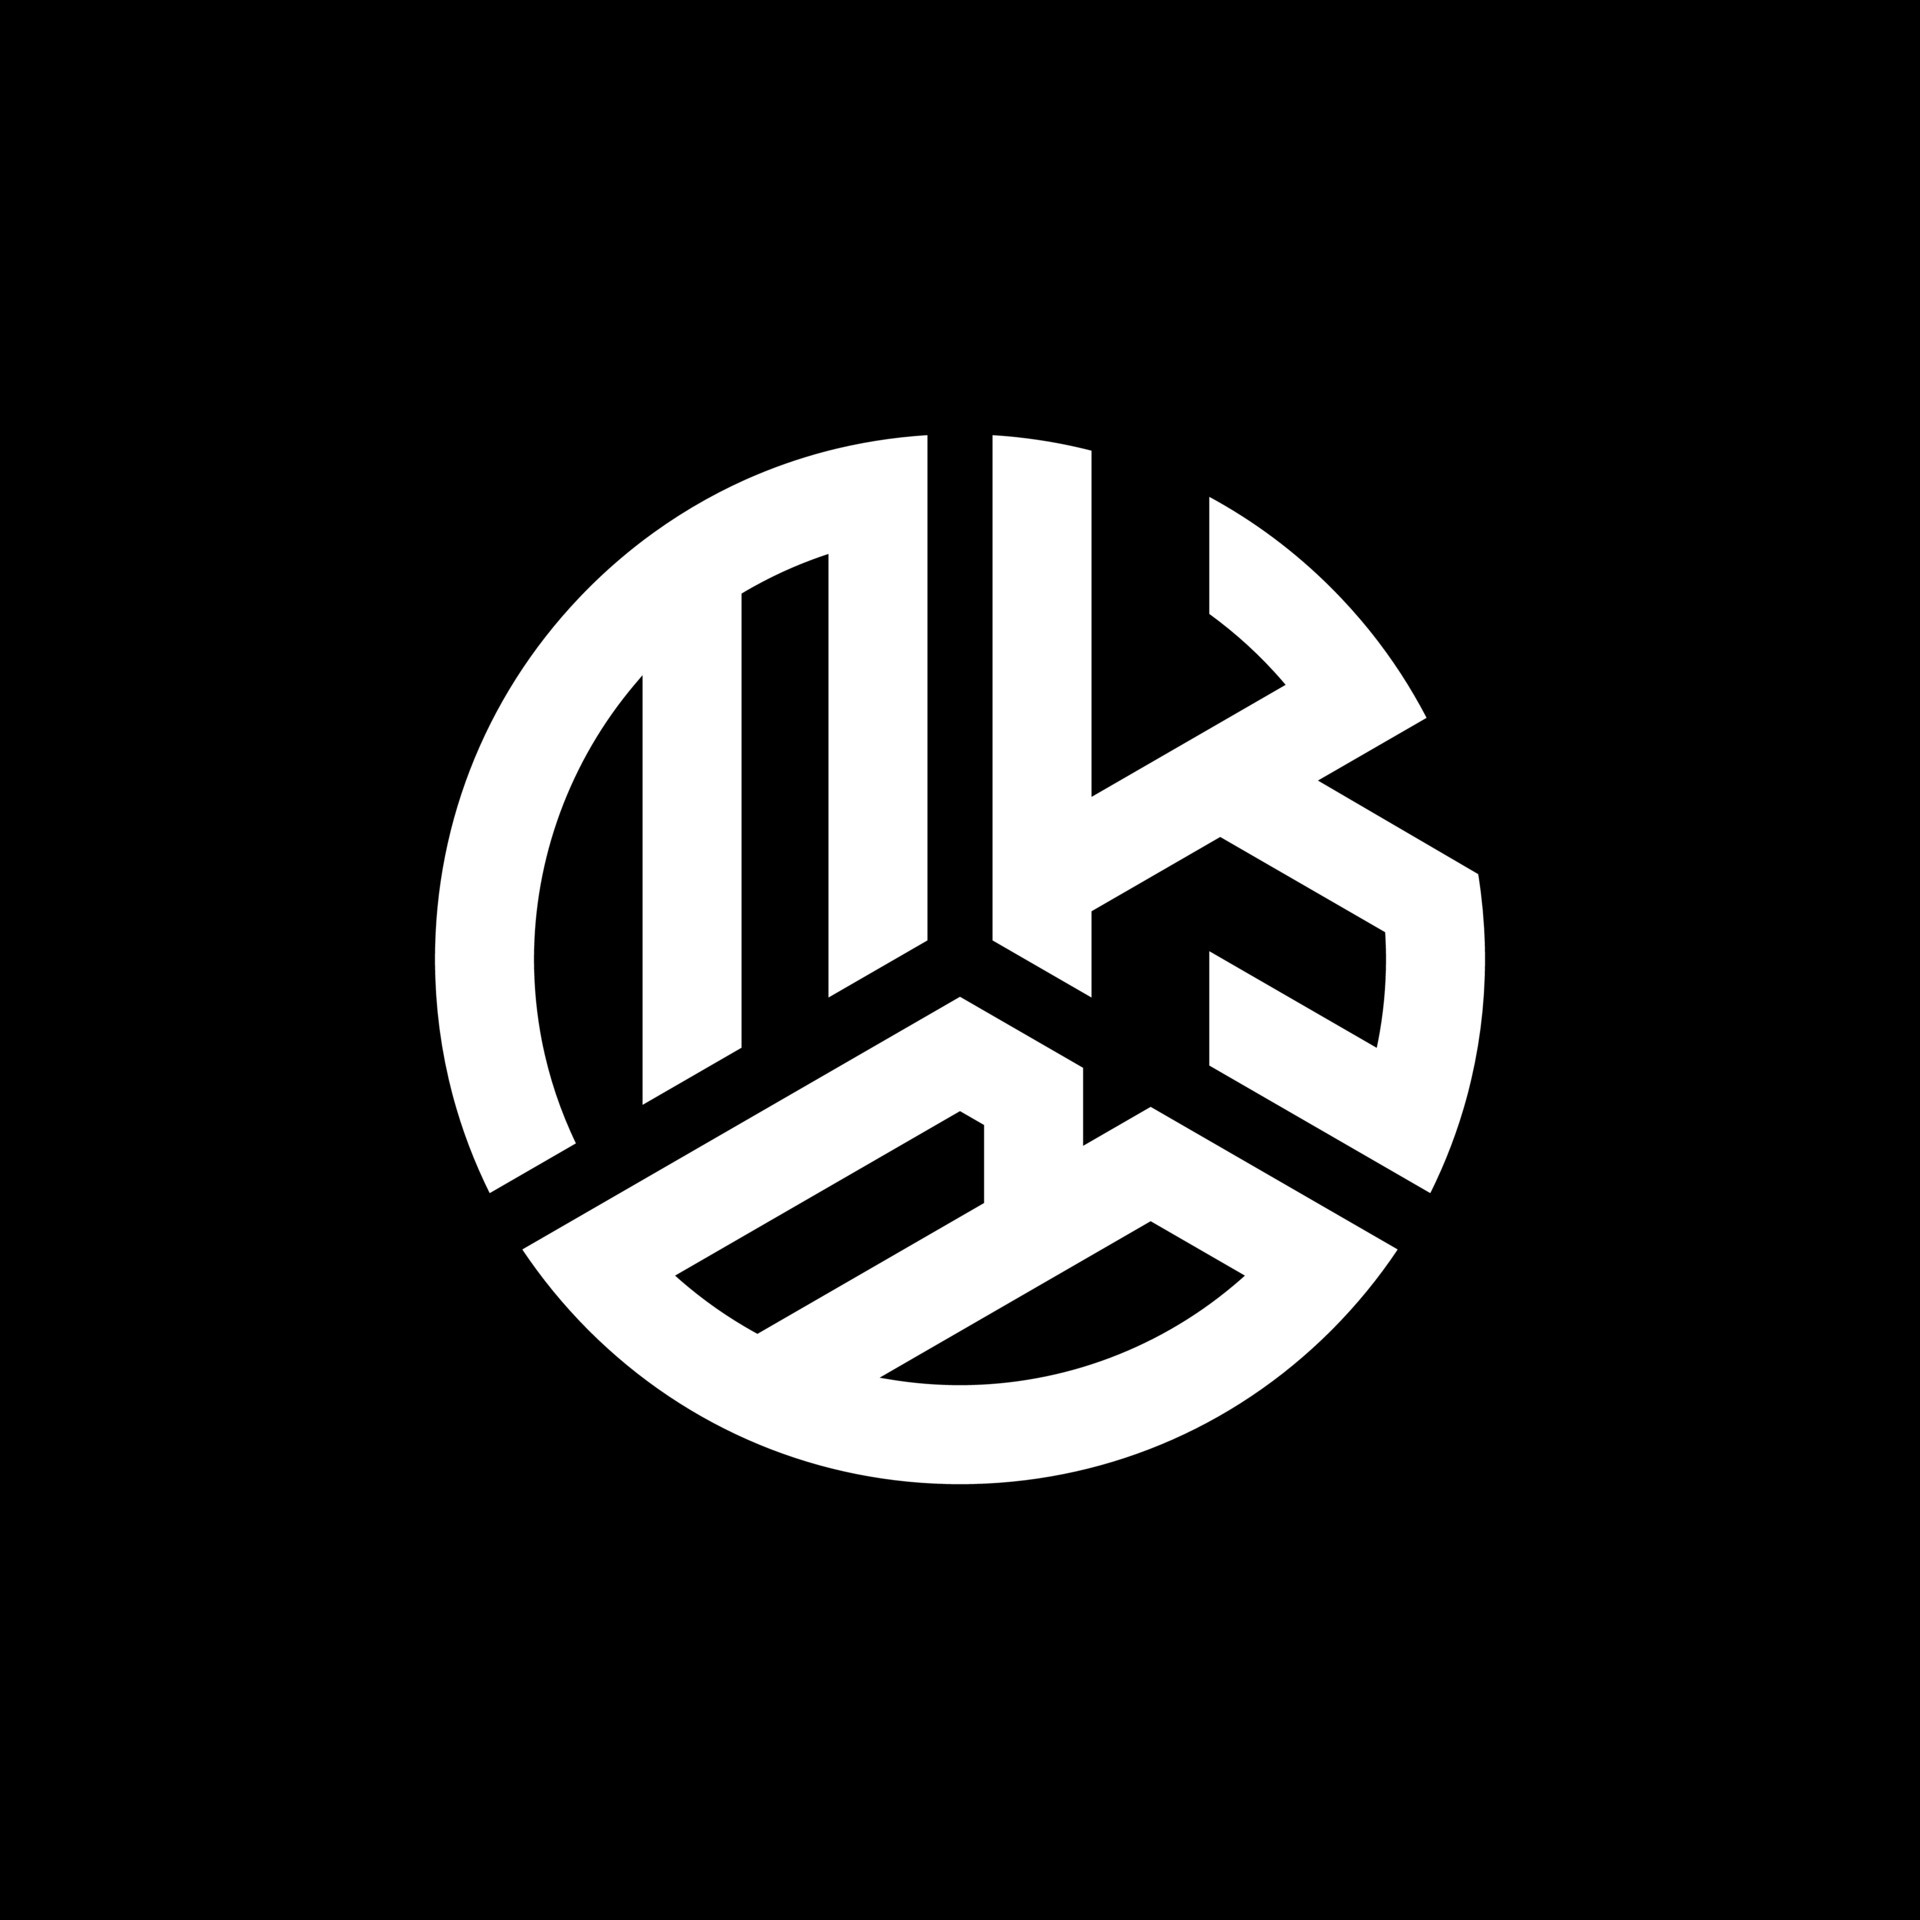 MKB letter logo design on black background. MKB creative initials